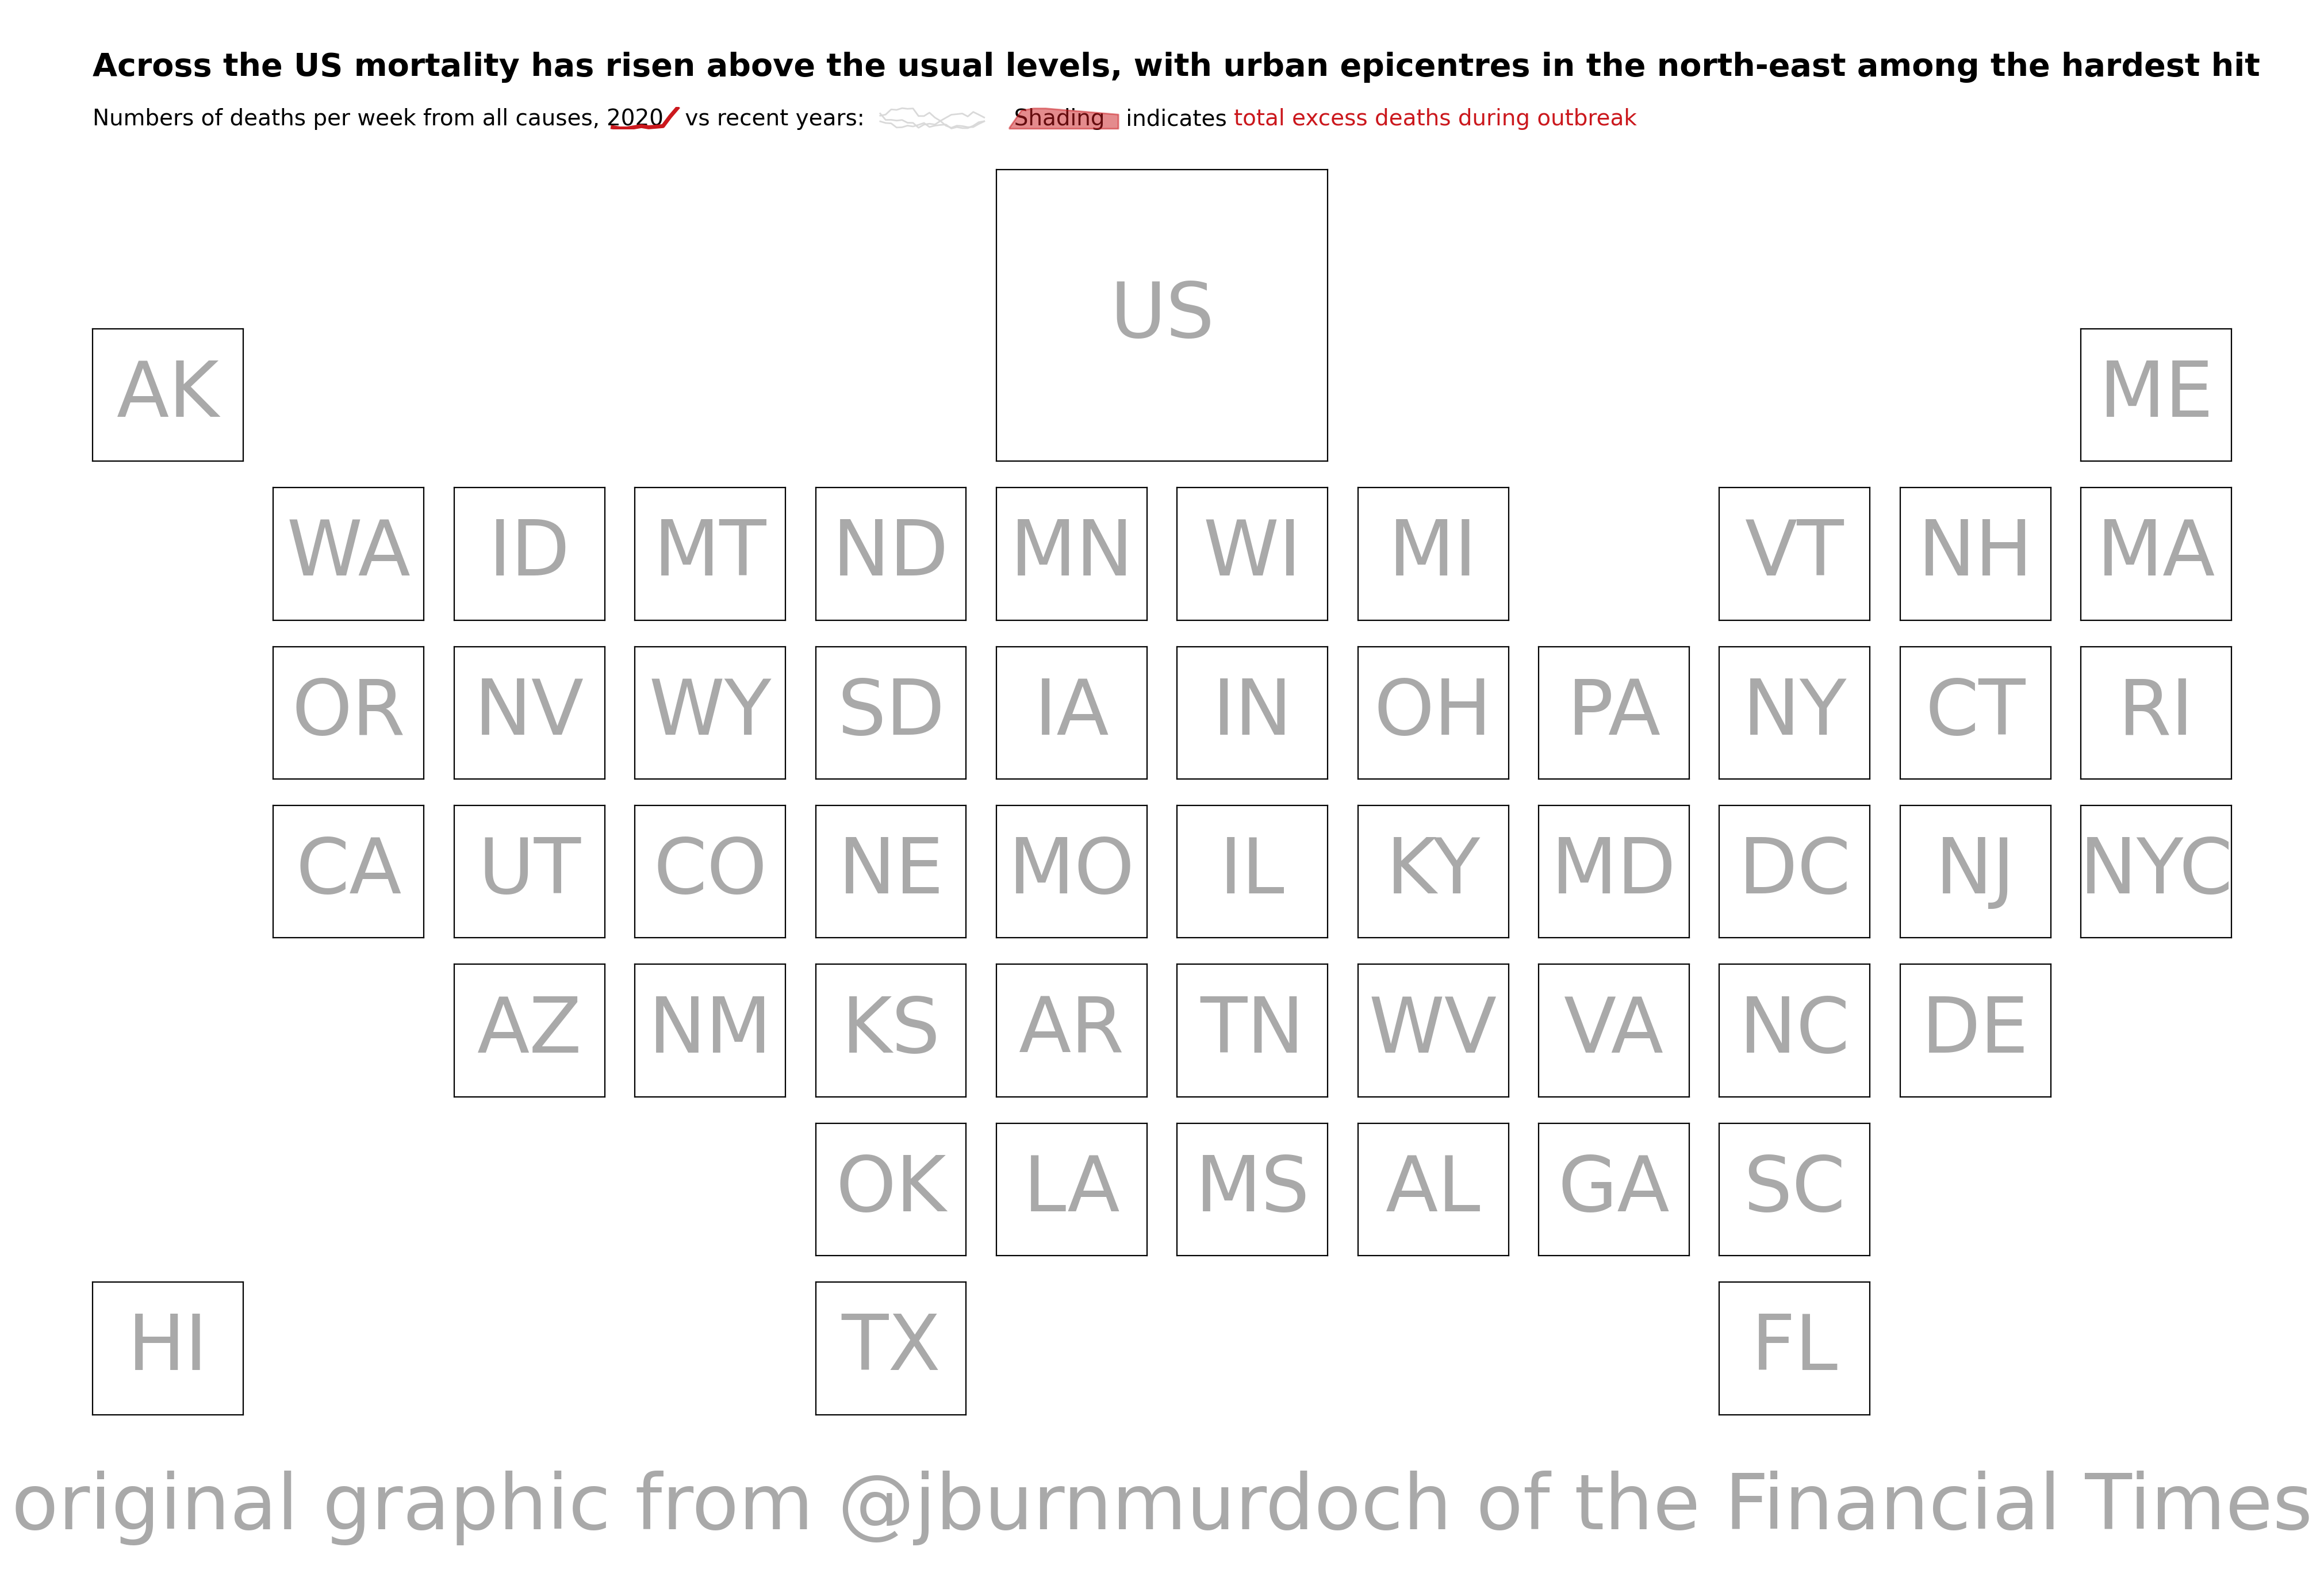 example_financial-times_jburnmurdoch.png